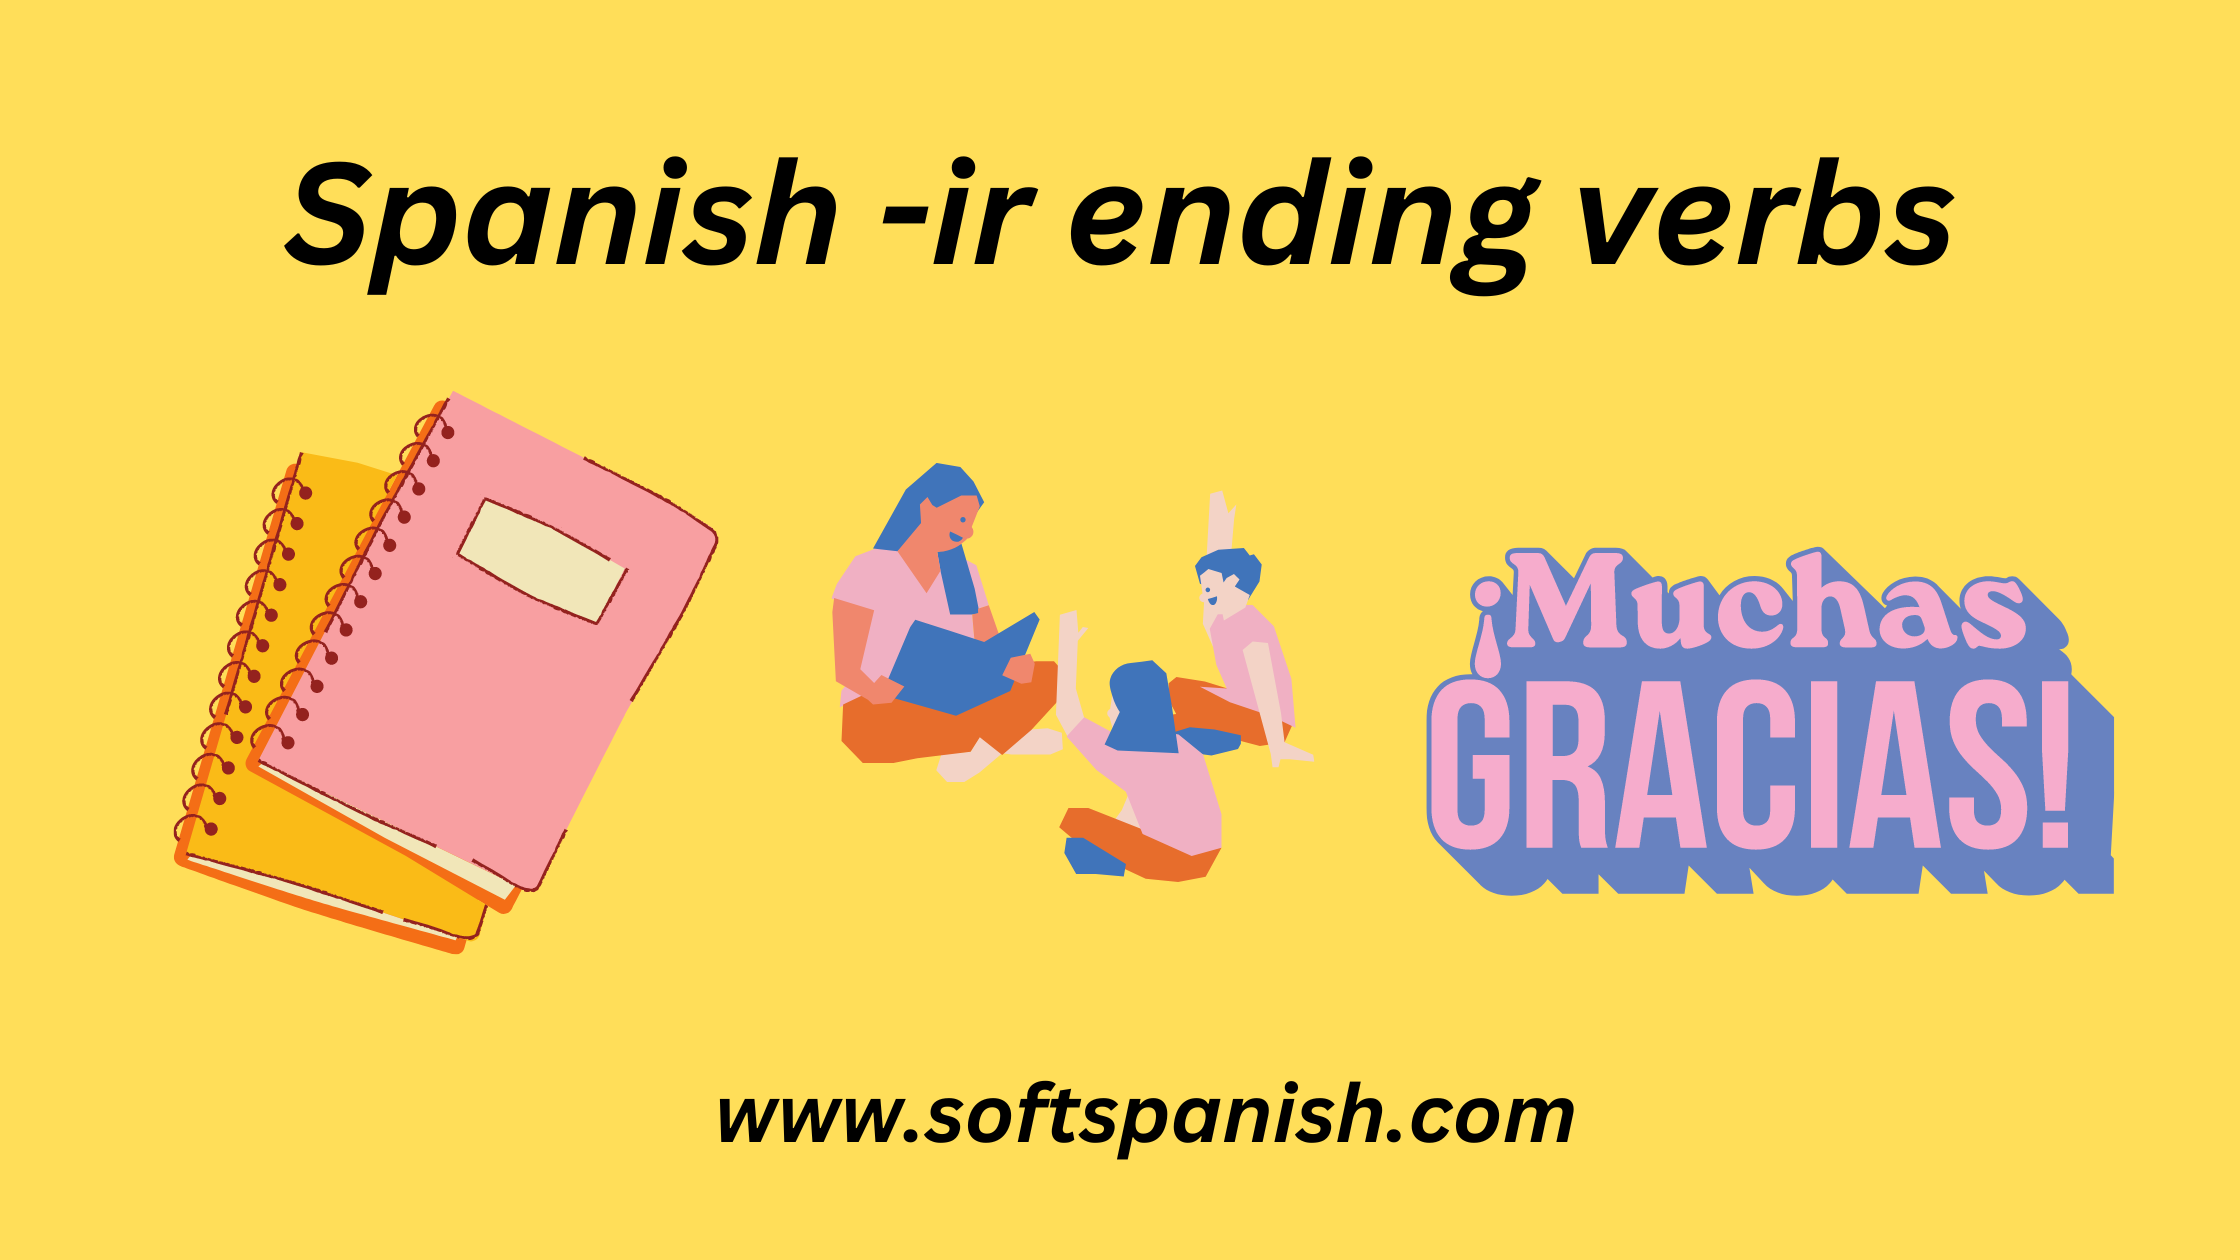 soft-spanish-learn-spanish-online-spanish-ir-ending-verbs